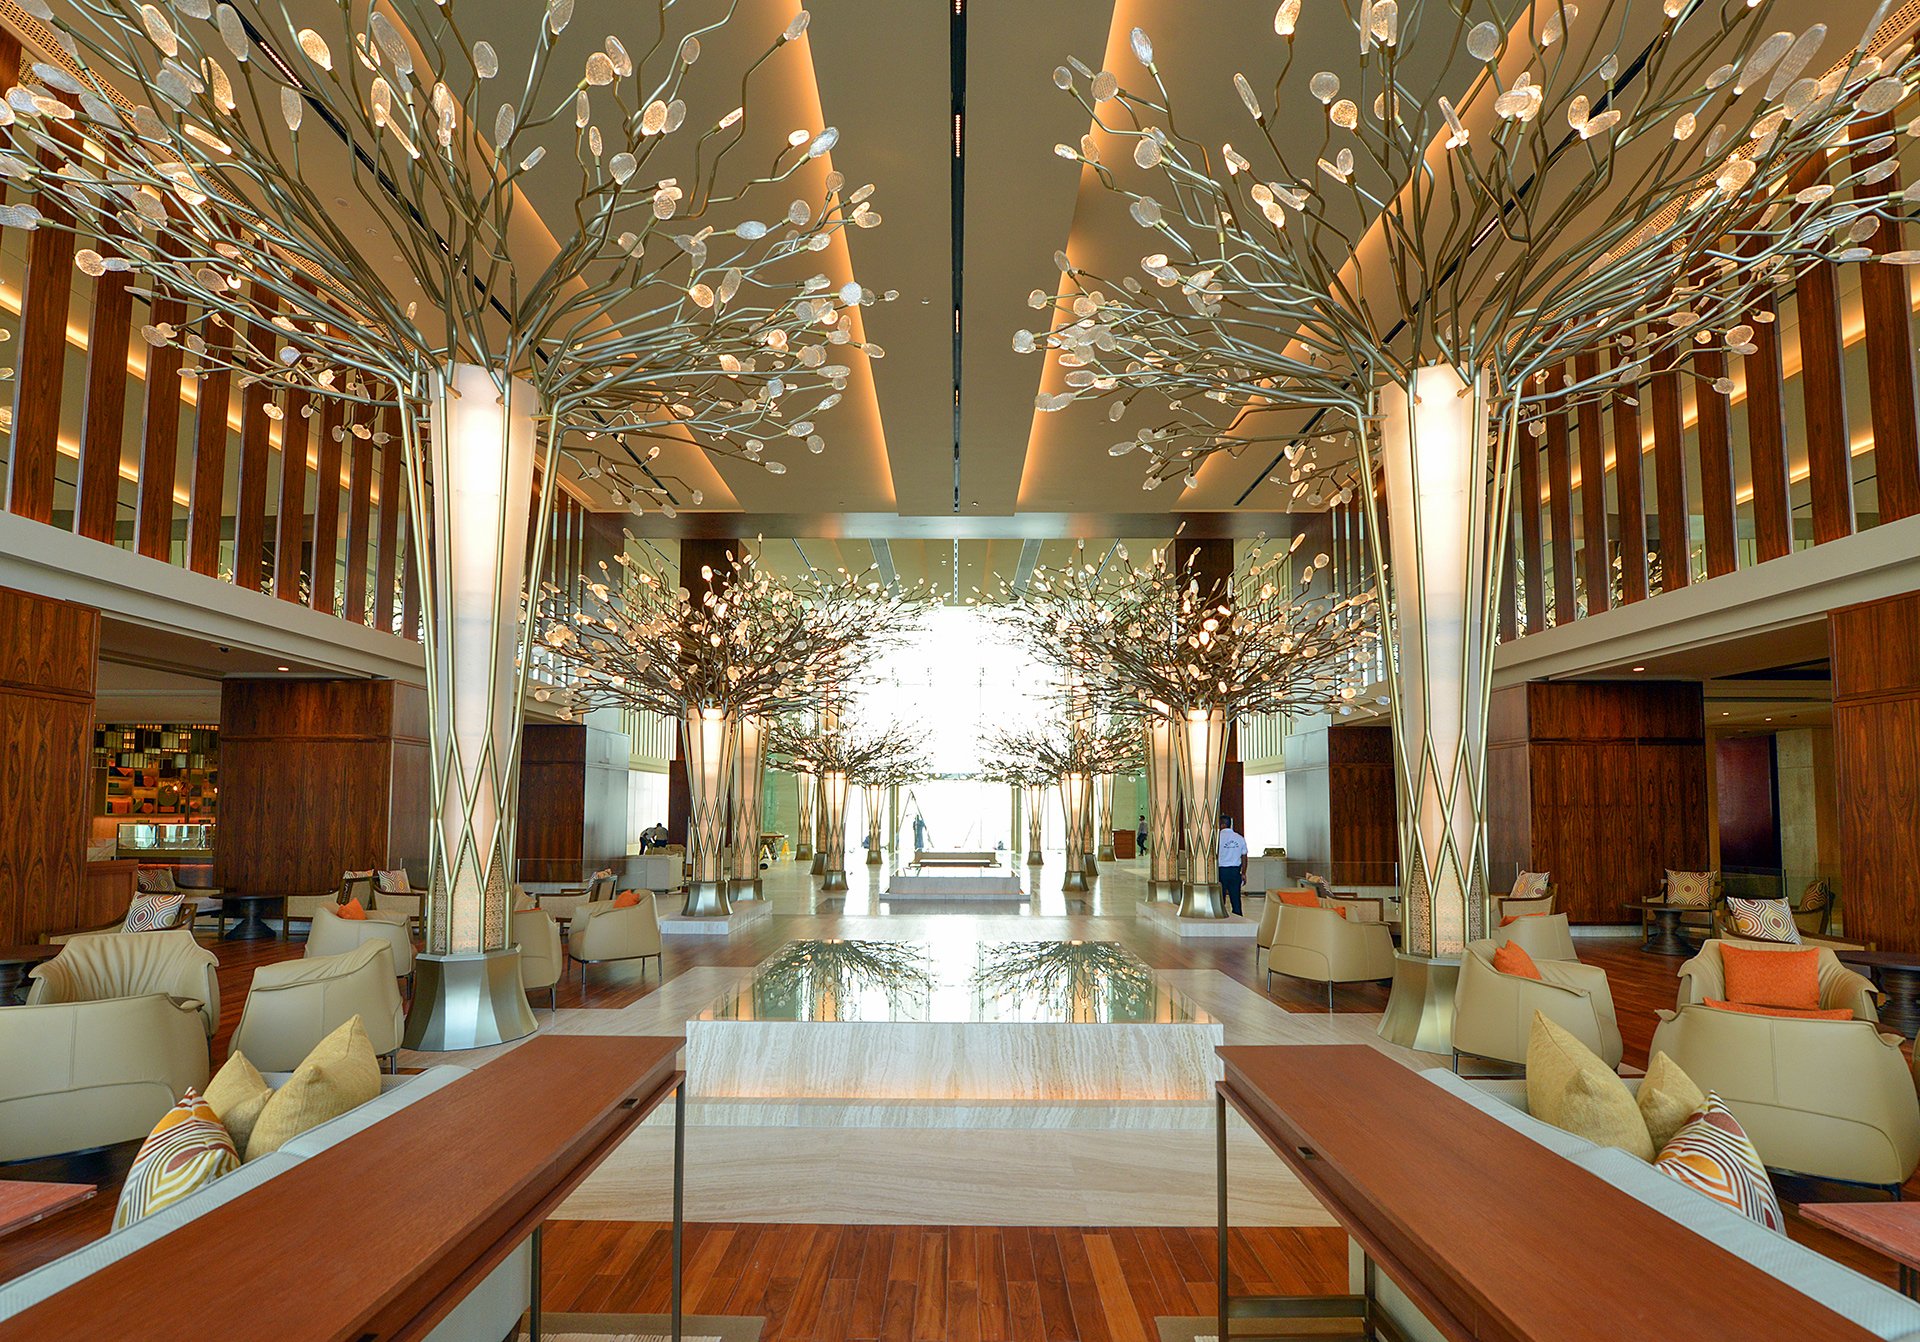 Mandarin Oriental Hotel, Dubai - Hotel Interior Design on Love That Design